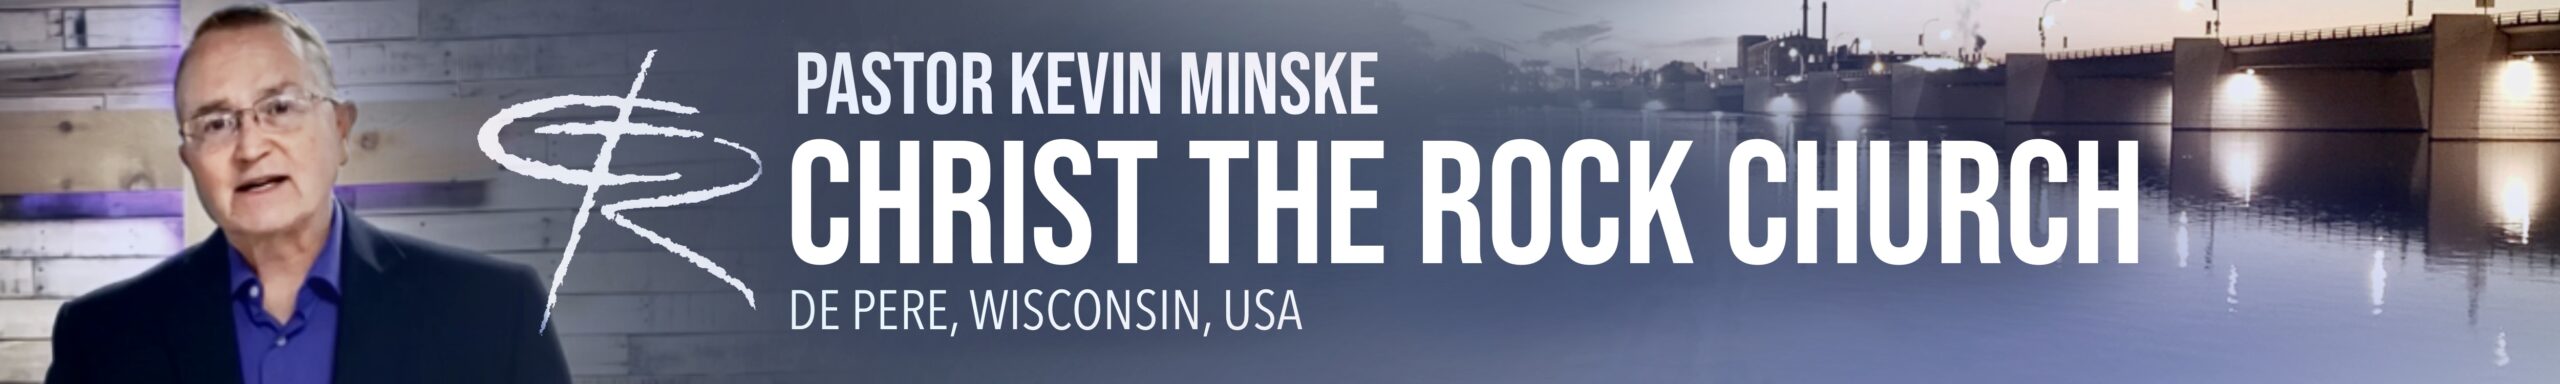 Kevin Minske - christ the rock church